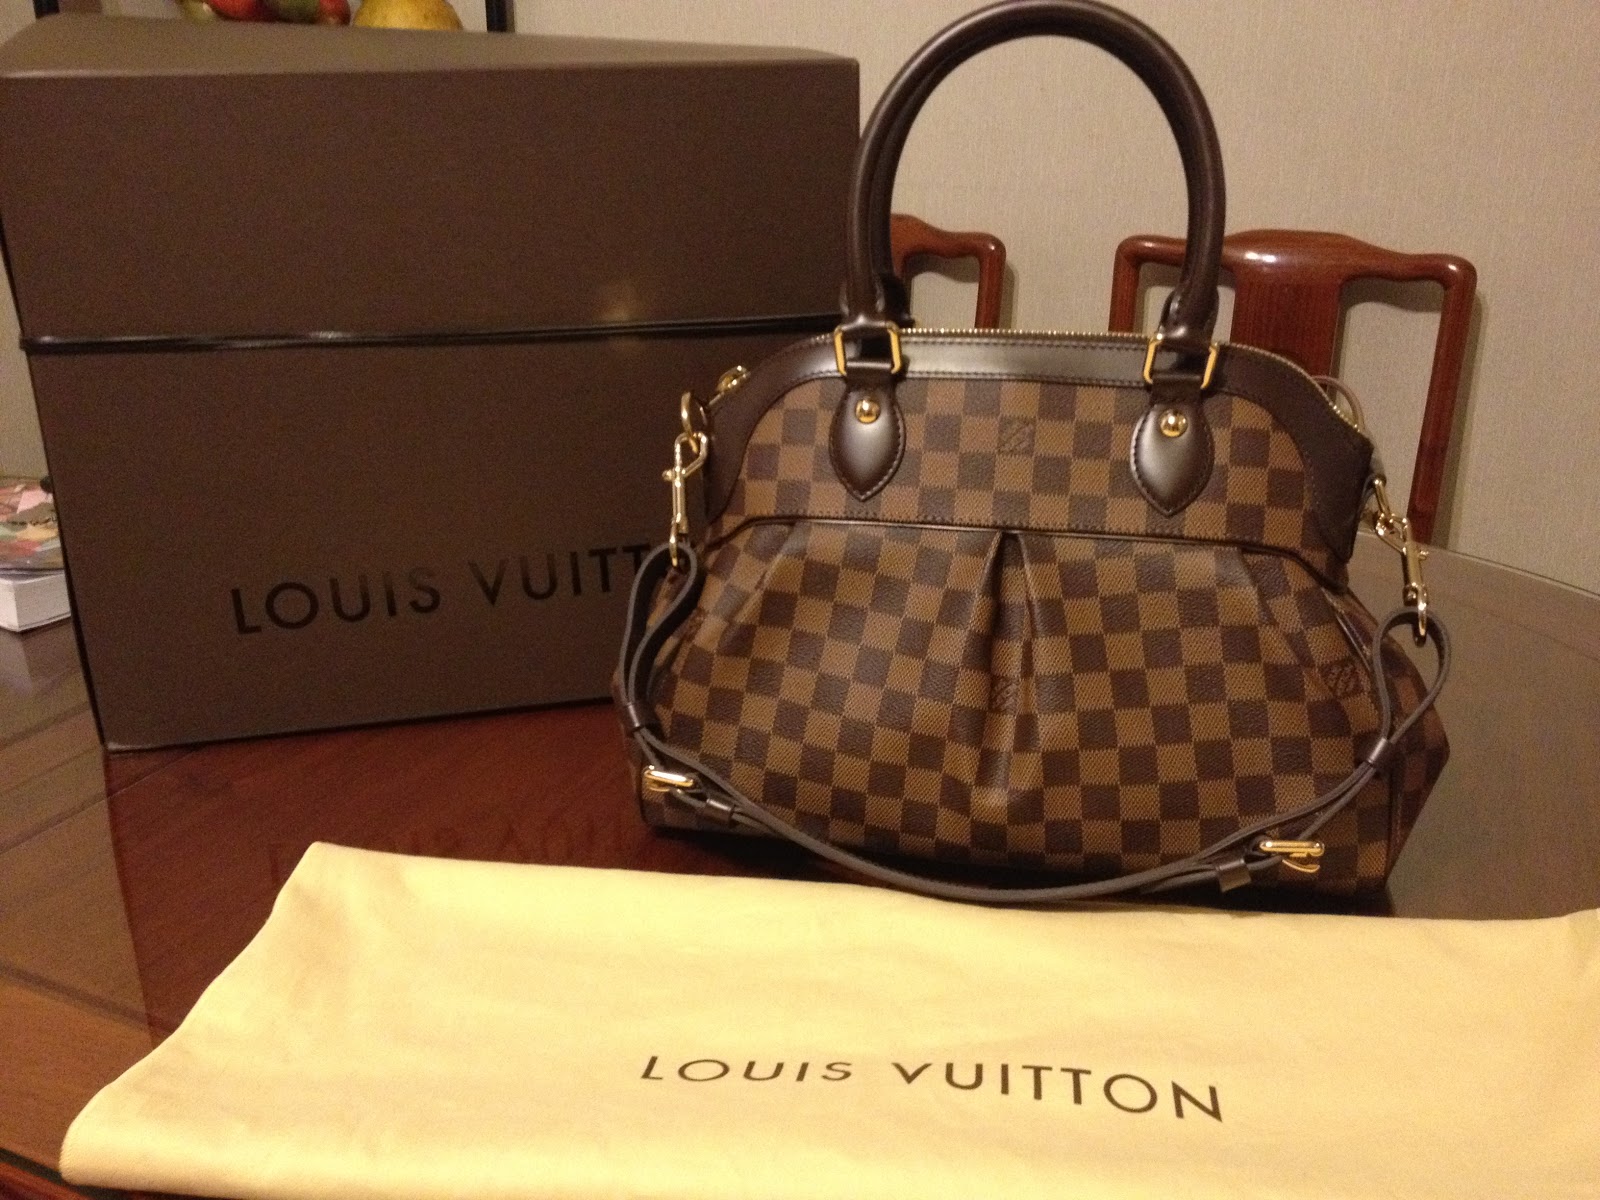 all things fashion, handbags, www.paulmartinsmith.com me : Louis Vuitton Trevi PM; my review on this ...